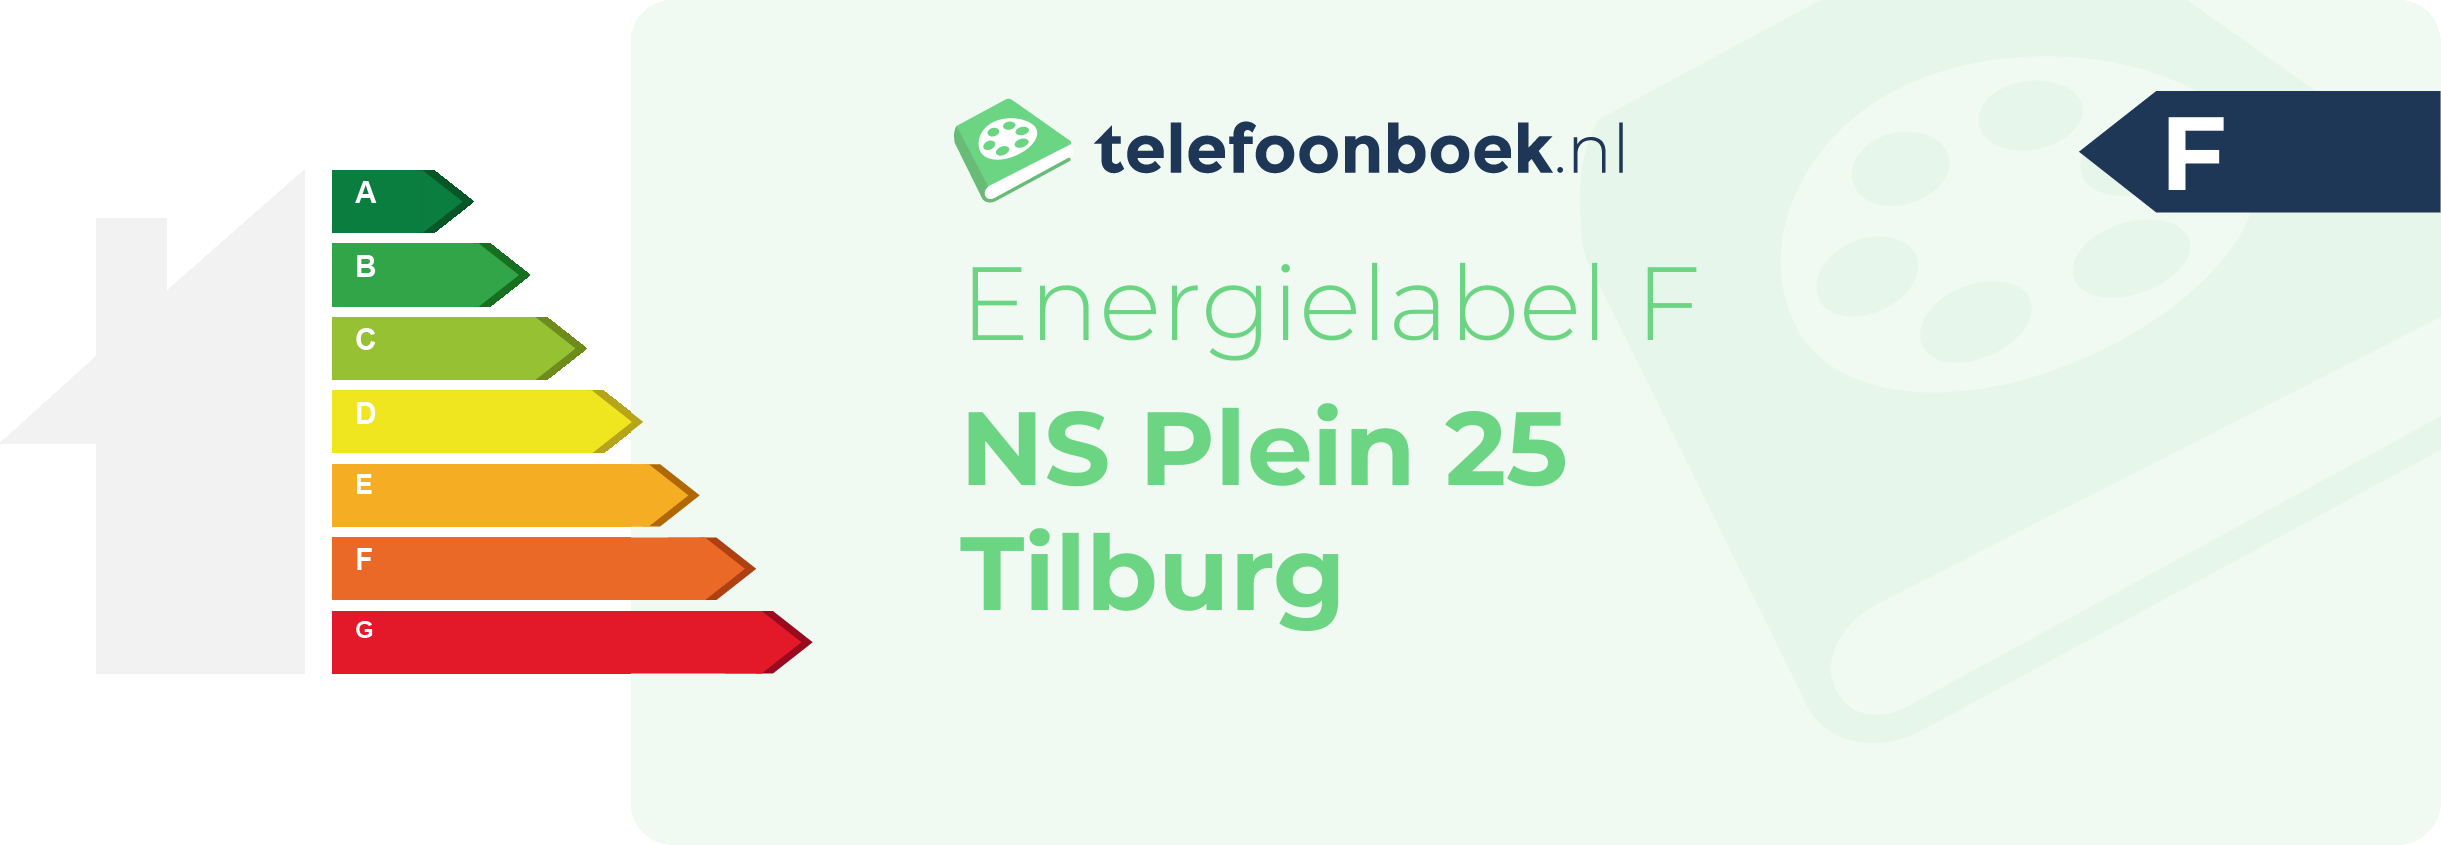 Energielabel NS Plein 25 Tilburg